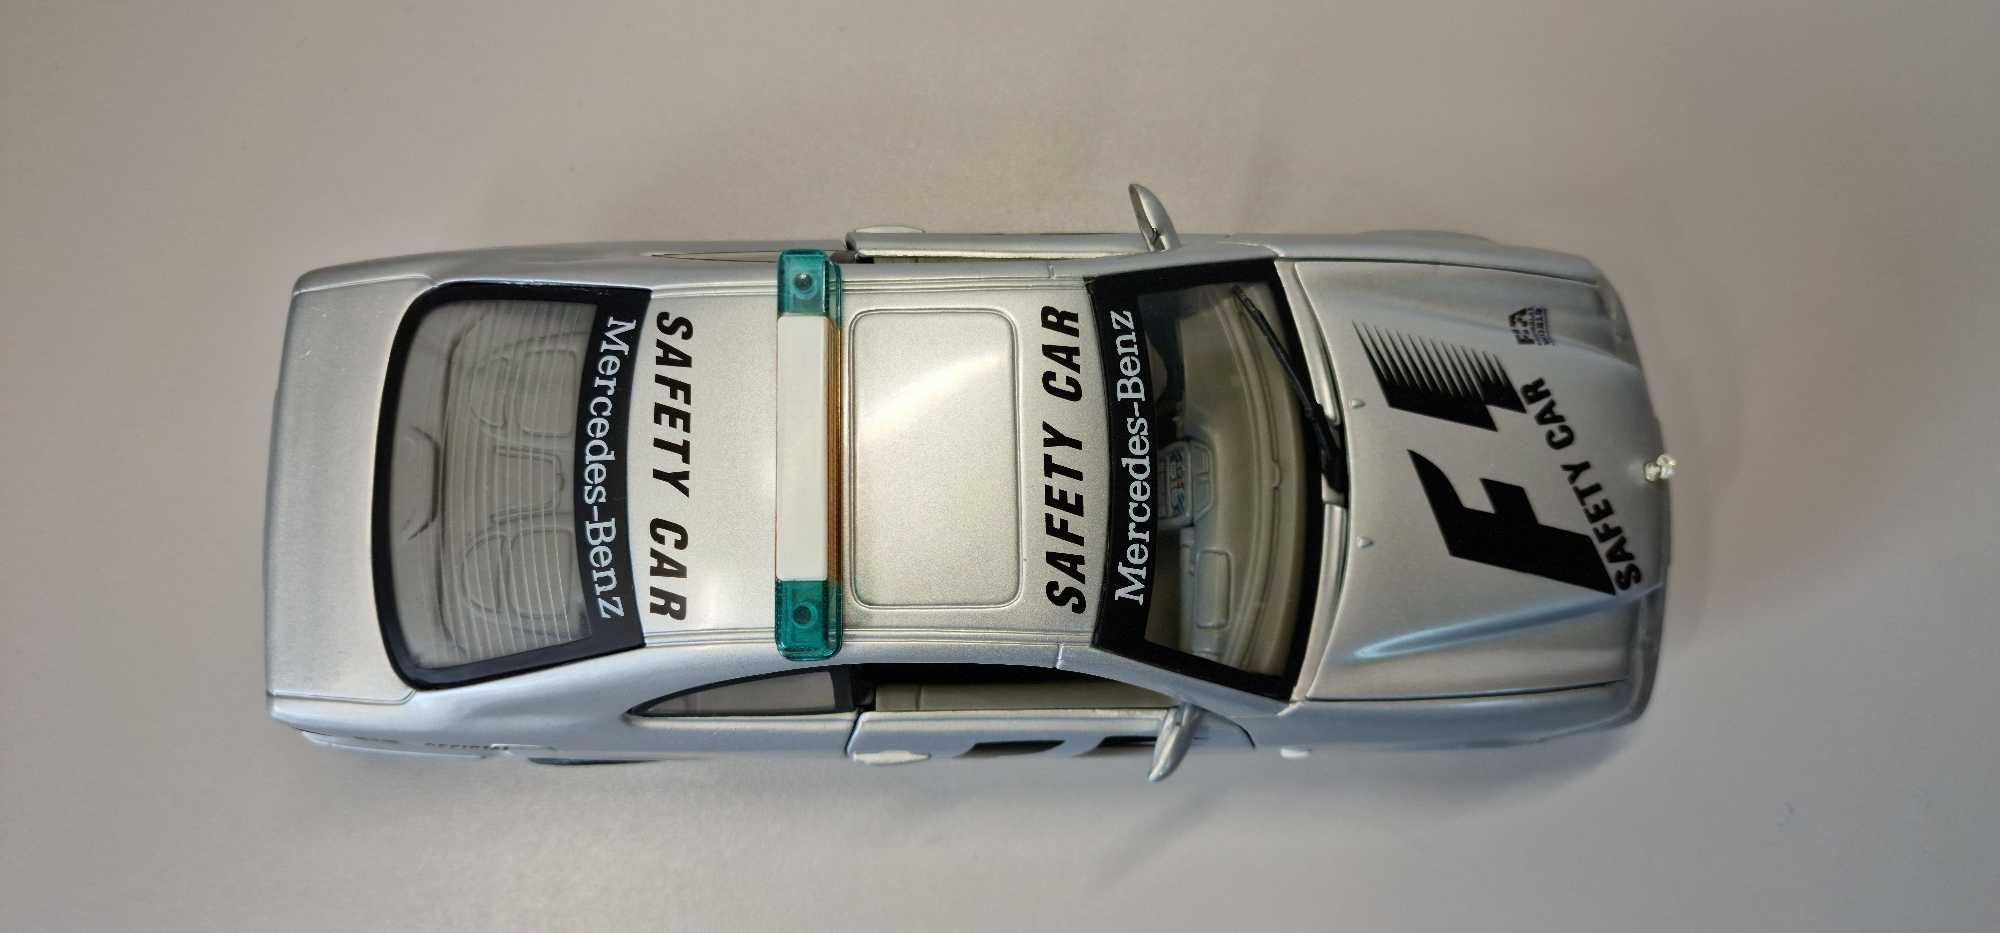 Macheta auto Mercedes Benz CLK AMG Safety Car F1, scara 1:18, Anson